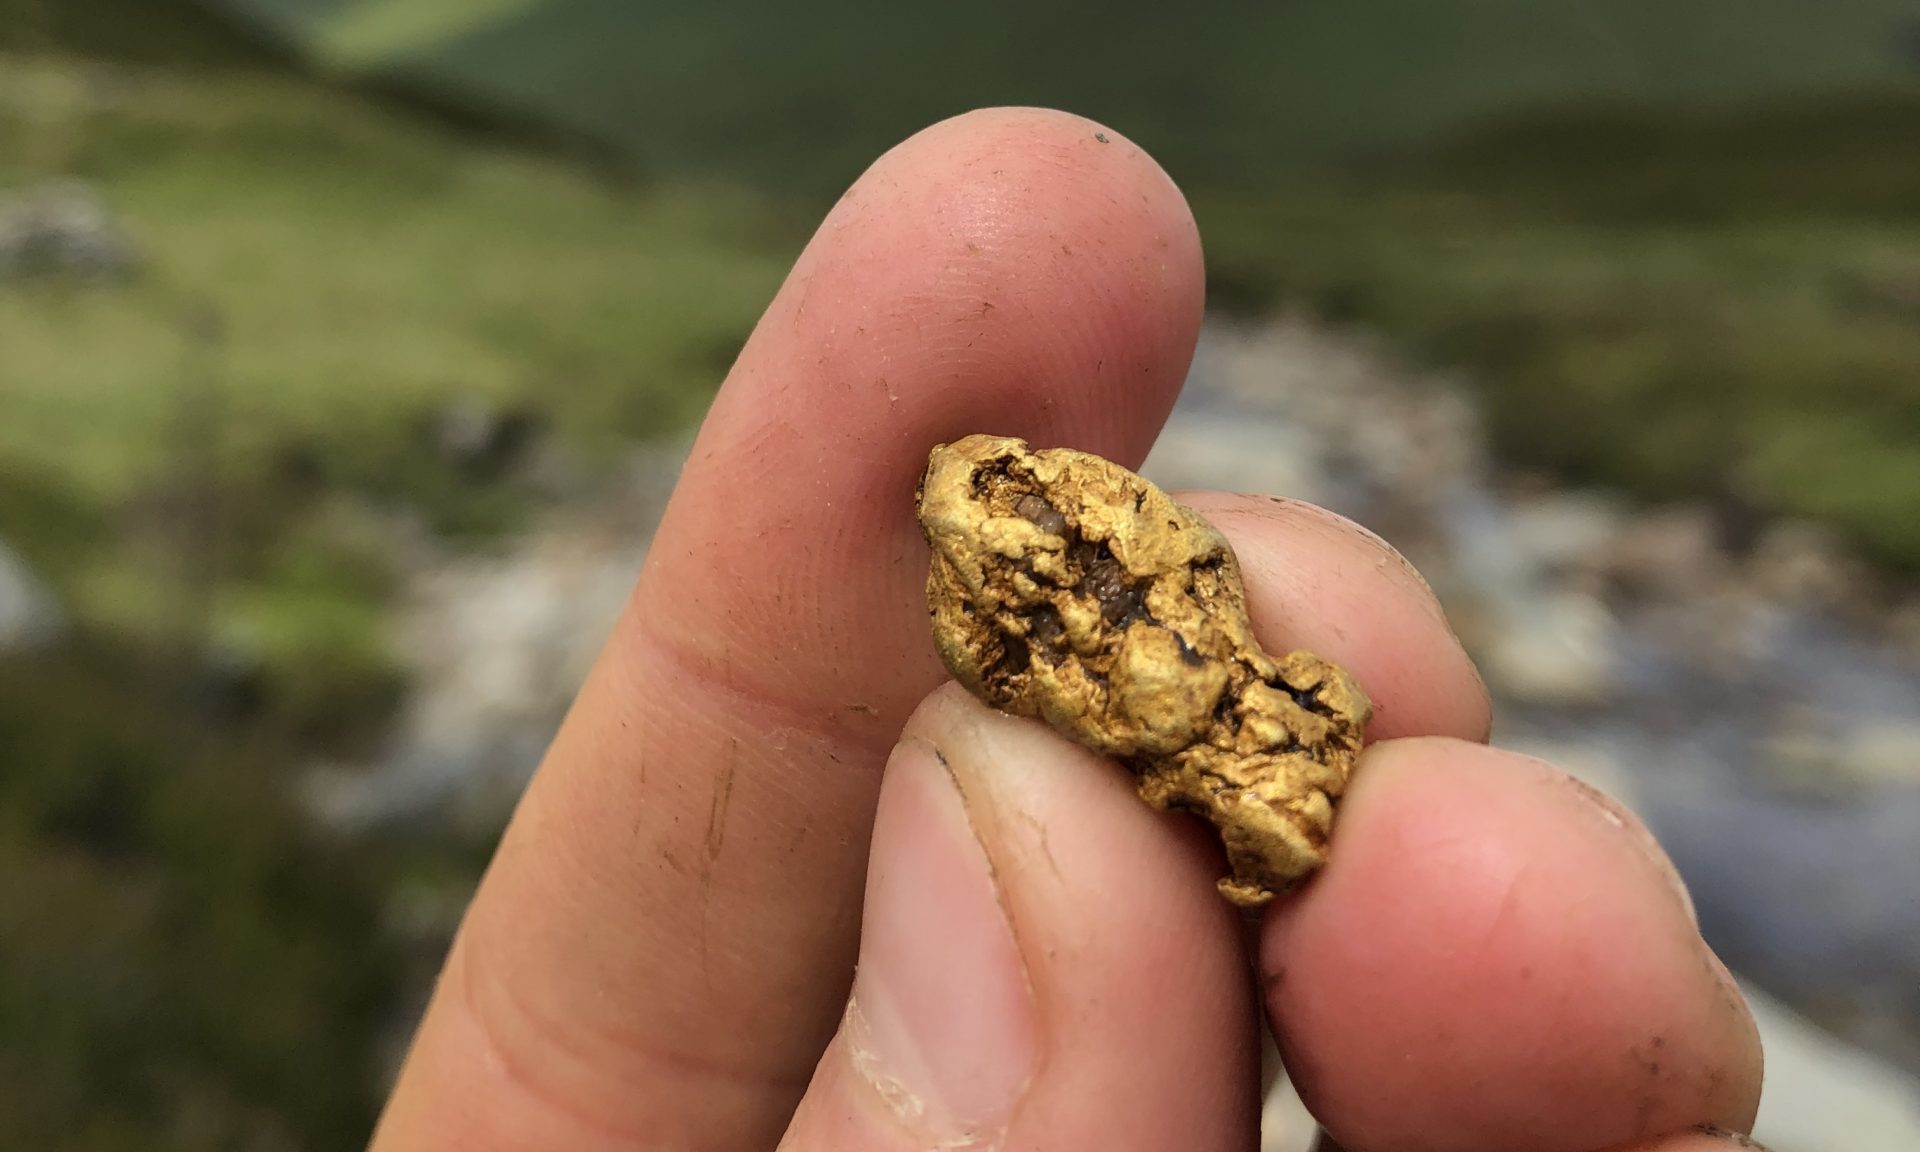 A 10 gram gold nugget found in Perthshire.